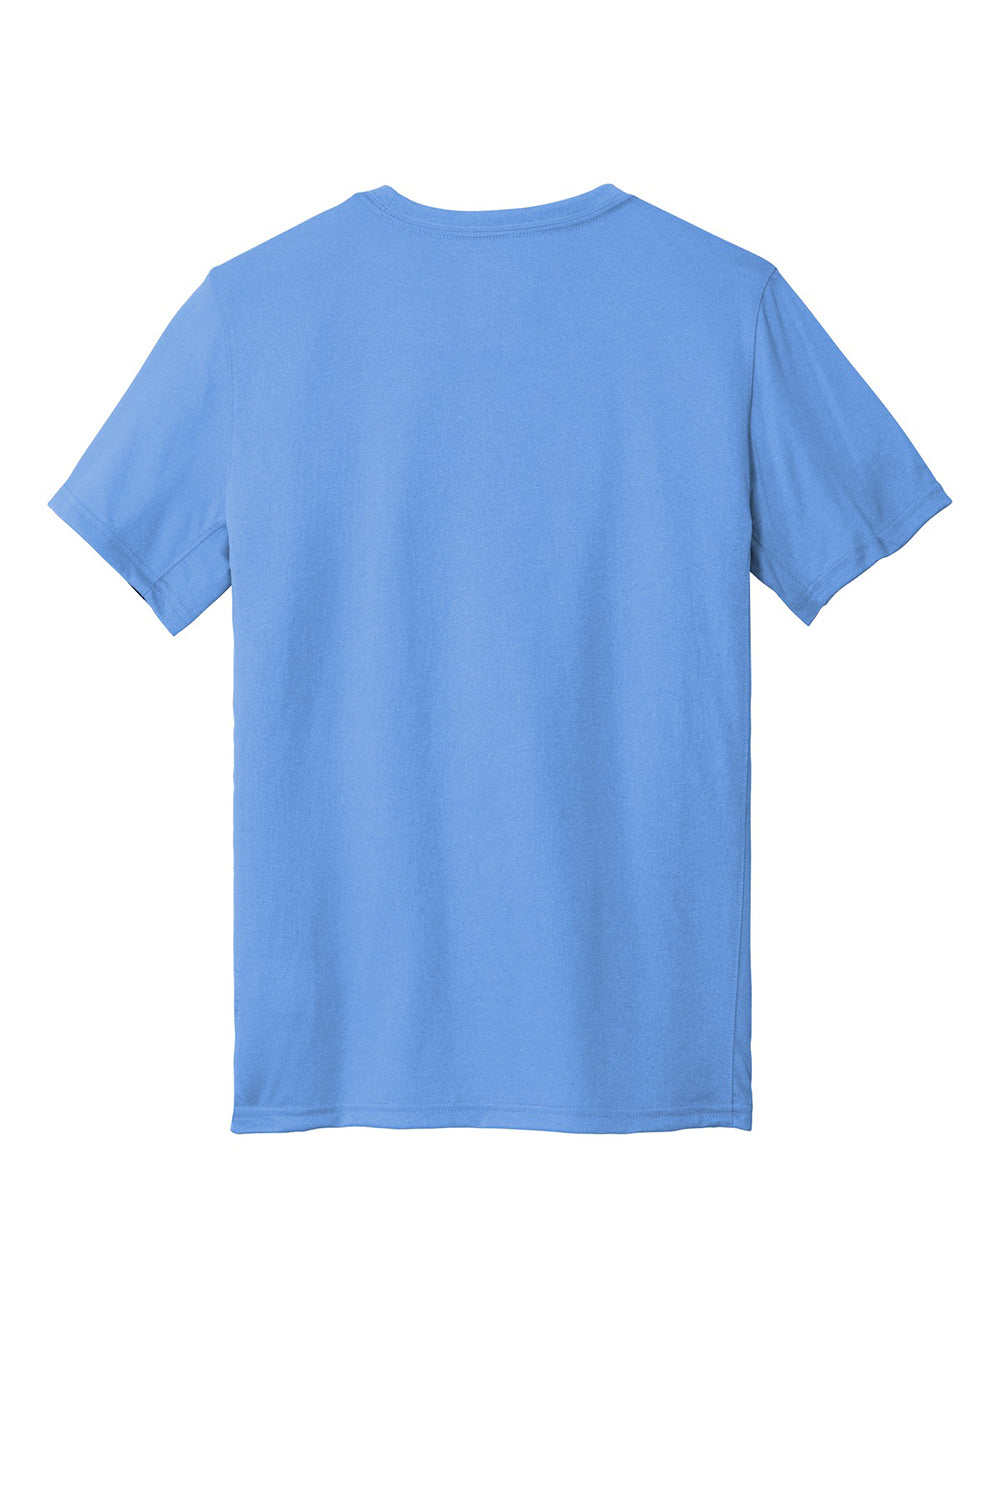 Nike 727982 Mens Legend Dri-Fit Moisture Wicking Short Sleeve Crewneck T-Shirt Valor Blue Flat Back